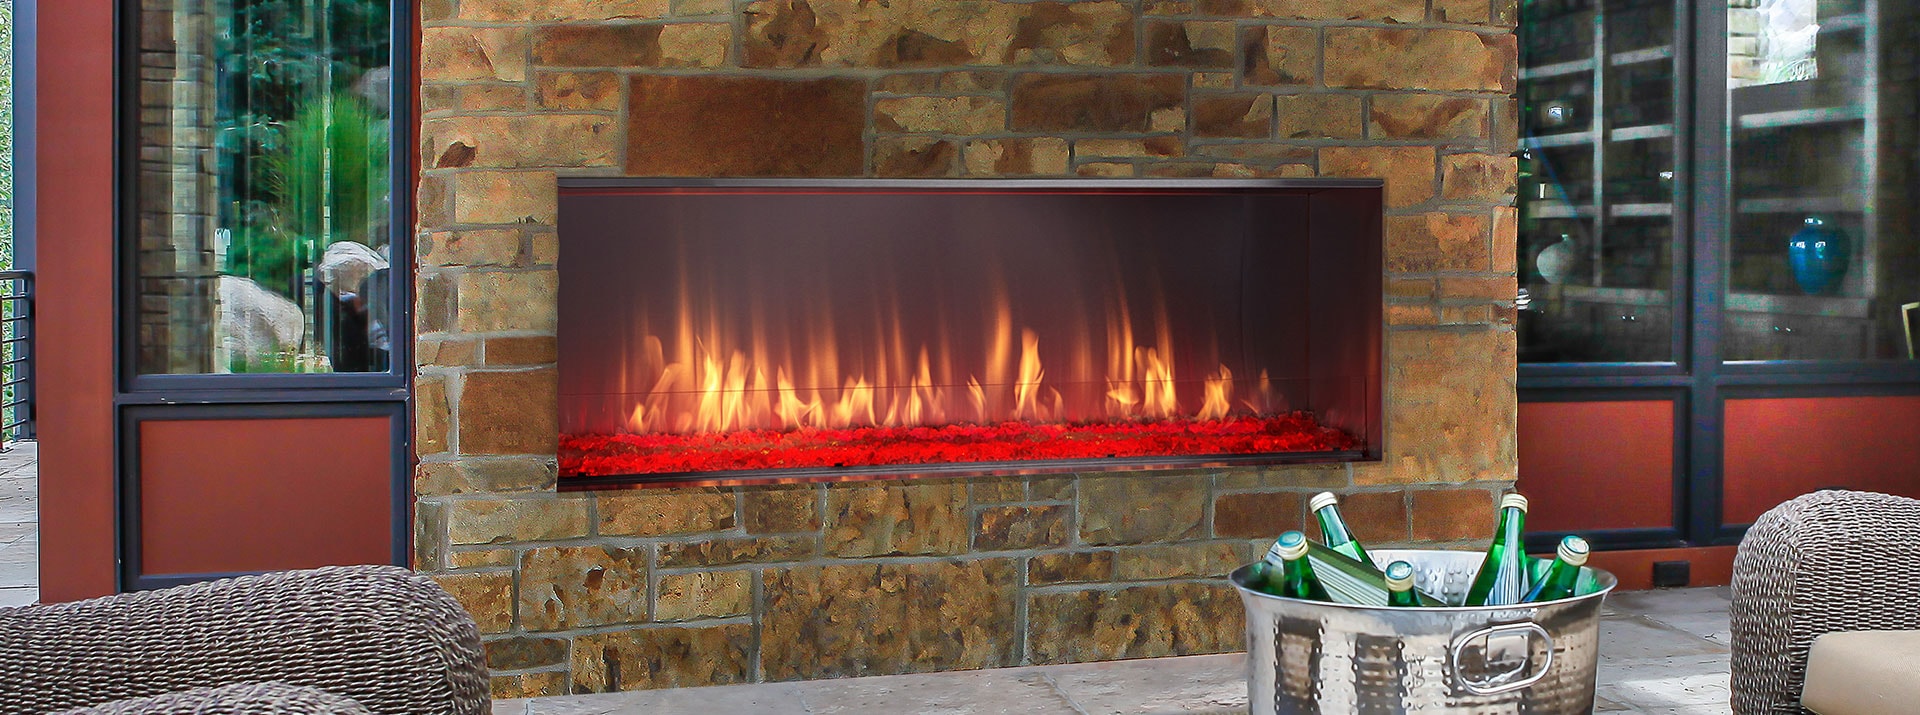 Linear Ventless Gas Fireplace Beautiful Lanai Gas Outdoor Fireplace